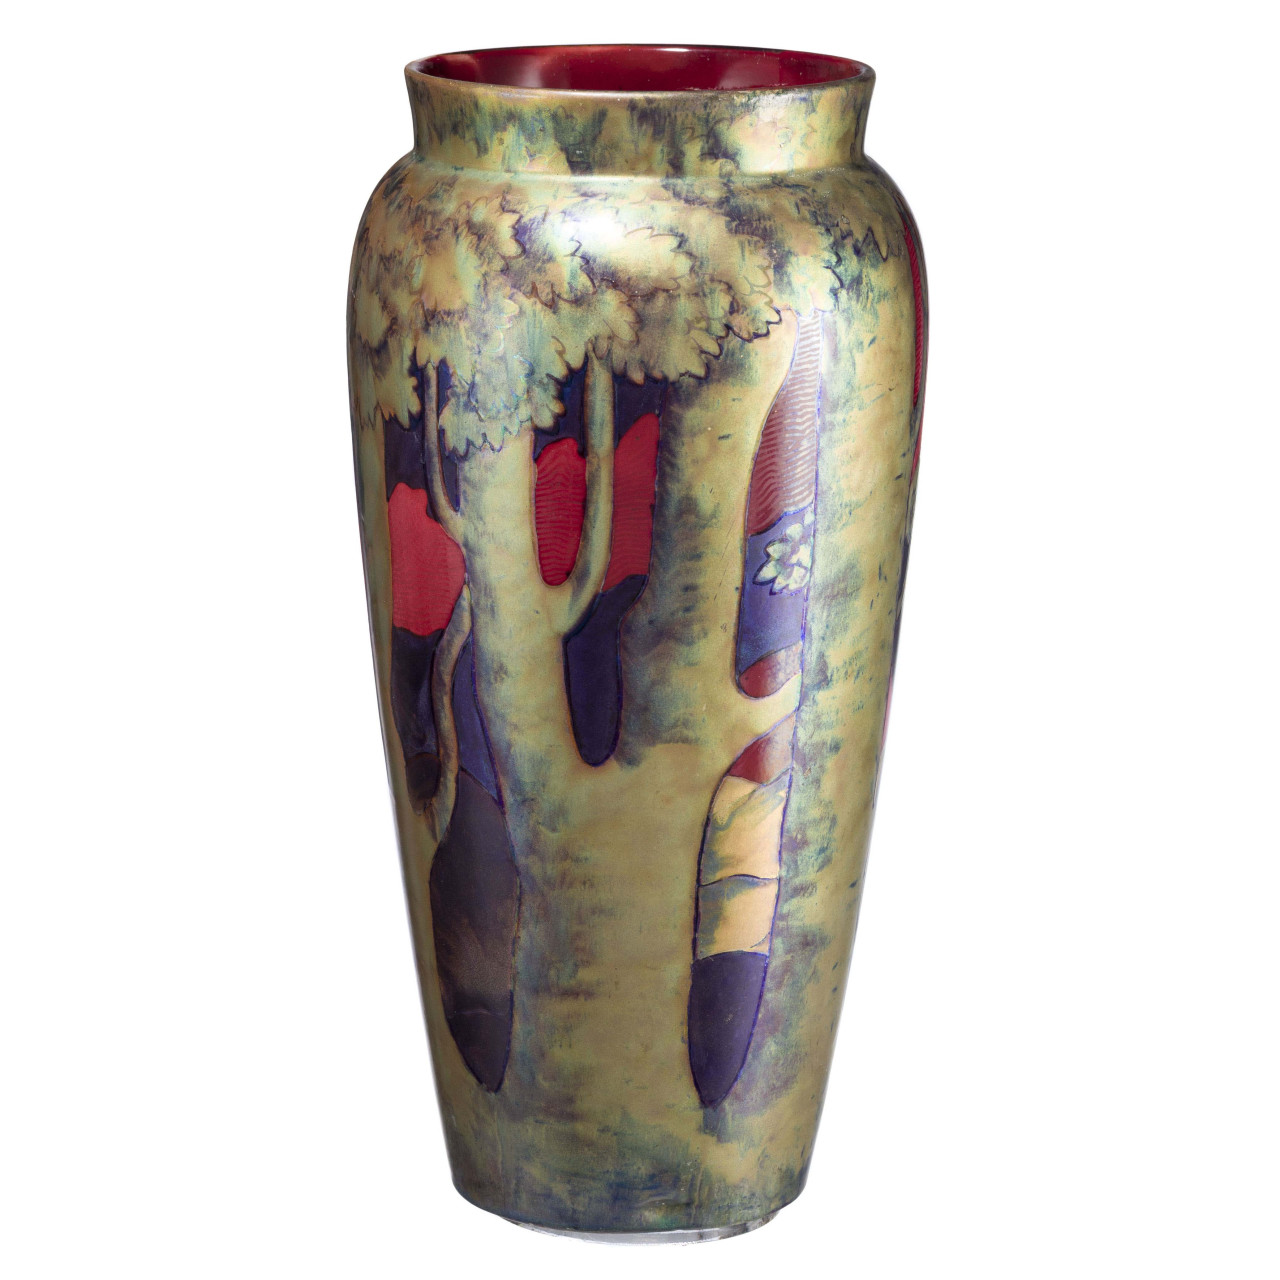 Los-376_Grosse-Jugendstil-Vase-mit-Landschaftsszene-Pecs_Zsolnay-Entwurf-wohl-von-Sikorski-um-1900-Hohe-ca-35-cm-Startpreis-8-000-EURboOjKuk3WNHHP